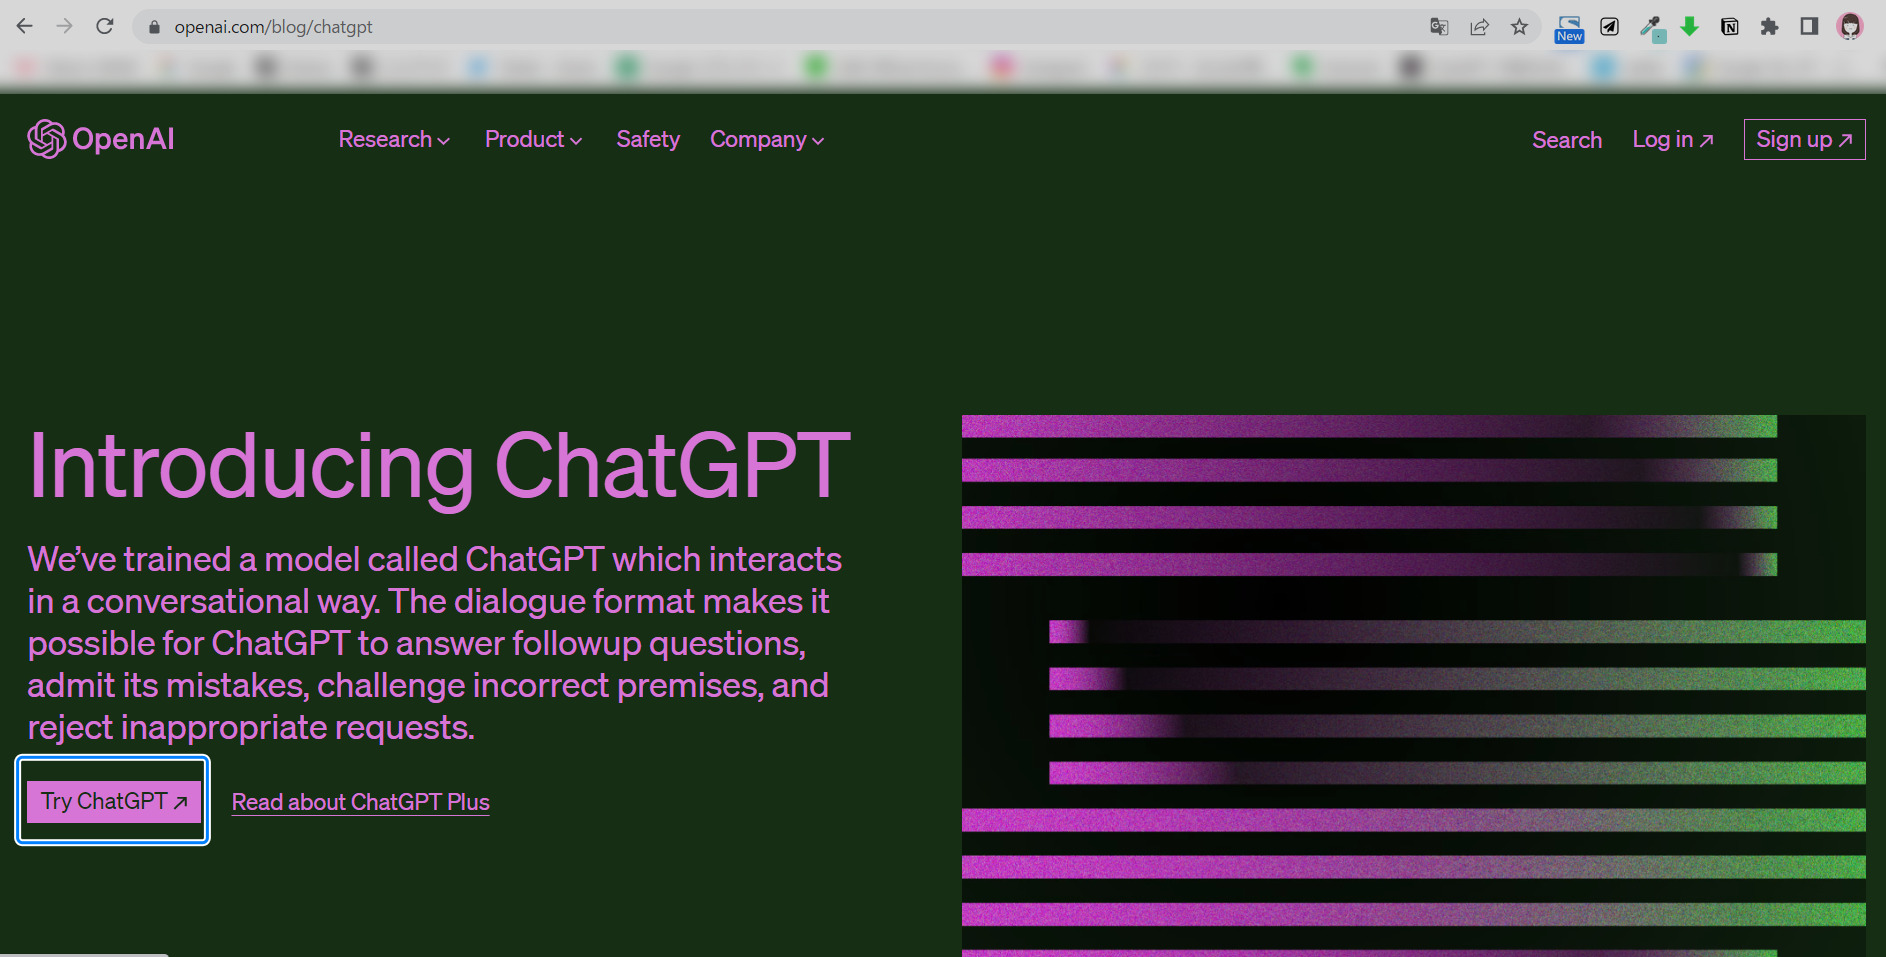 ②「Try ChatGPT」ボタンをクリック